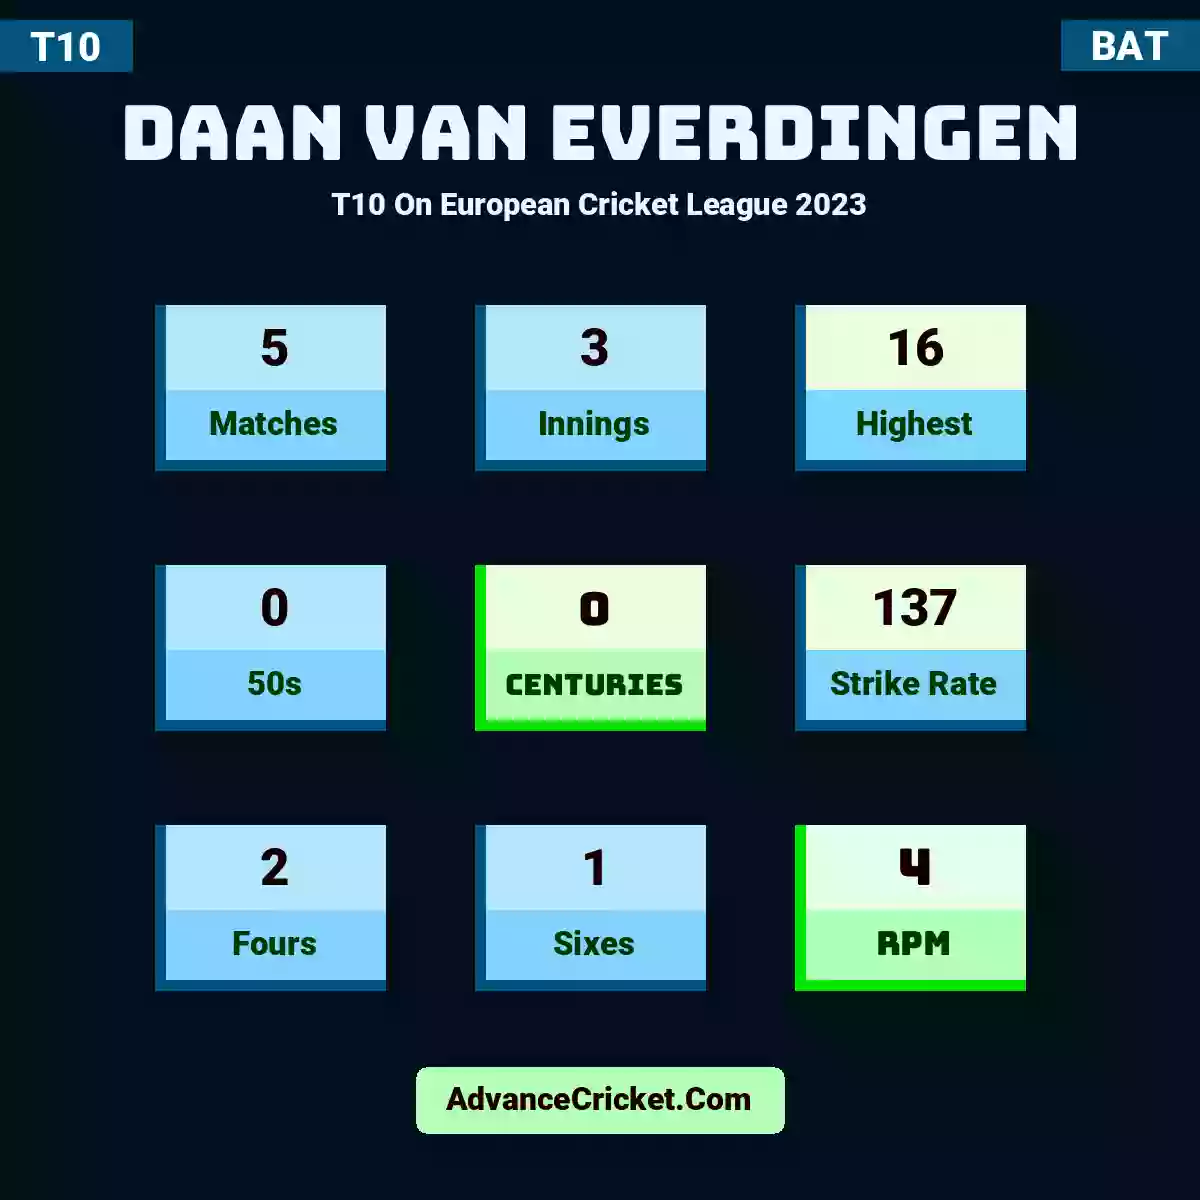 Daan Van Everdingen T10  On European Cricket League 2023, Daan Van Everdingen played 5 matches, scored 16 runs as highest, 0 half-centuries, and 0 centuries, with a strike rate of 137. D.Everdingen hit 2 fours and 1 sixes, with an RPM of 4.